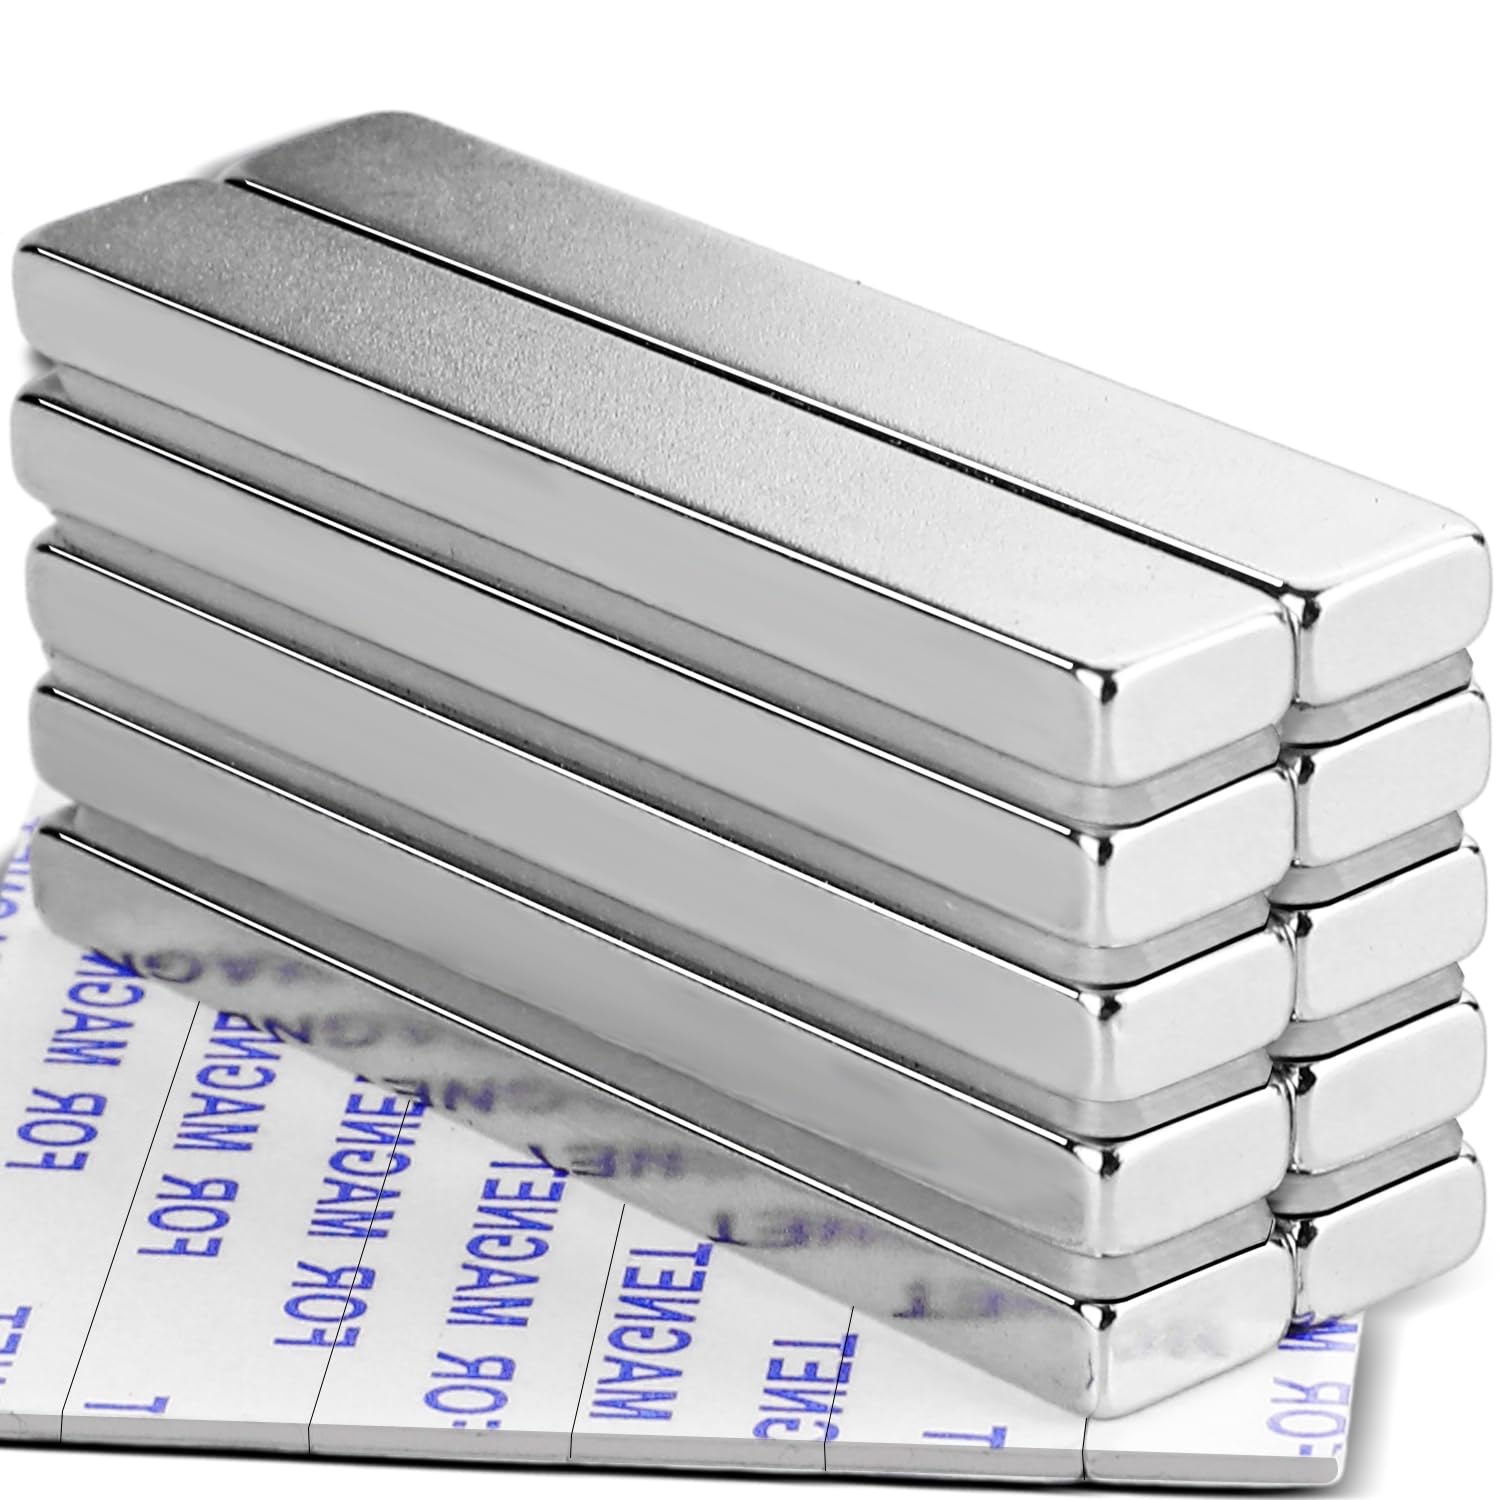 DIYMAG Powerful Neodymium Bar Magnets, Rare-Earth Metal Neodymium Magnet, N52, Incredibly Strong 33 LB Strength - 60 x 10 x 5 mm, Pack 